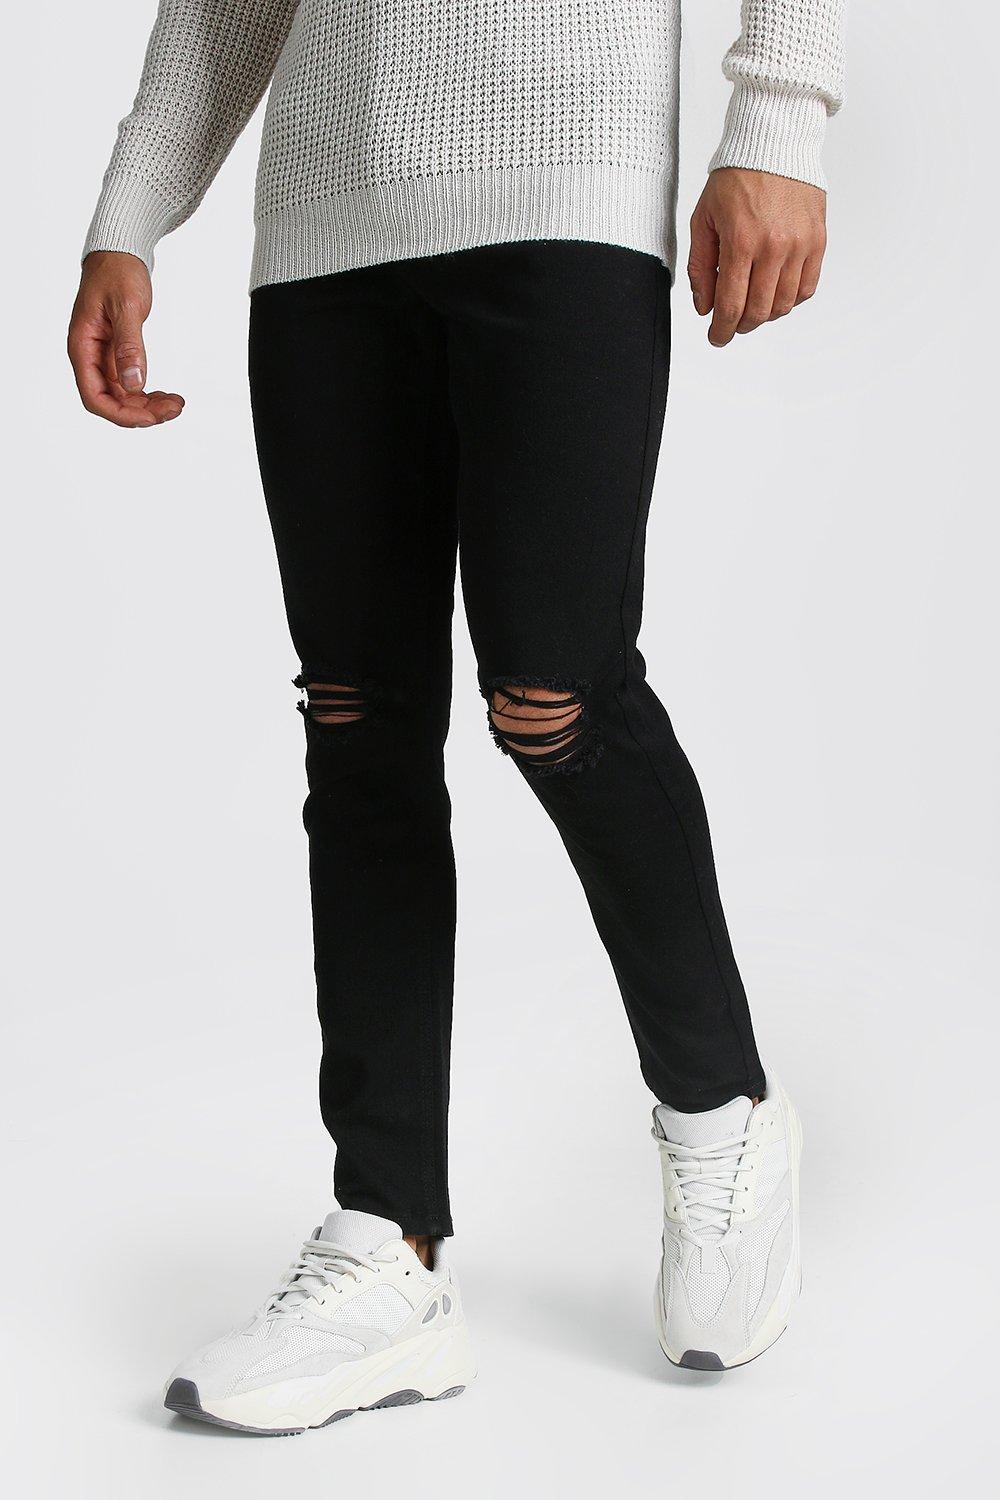 boohooman white jeans